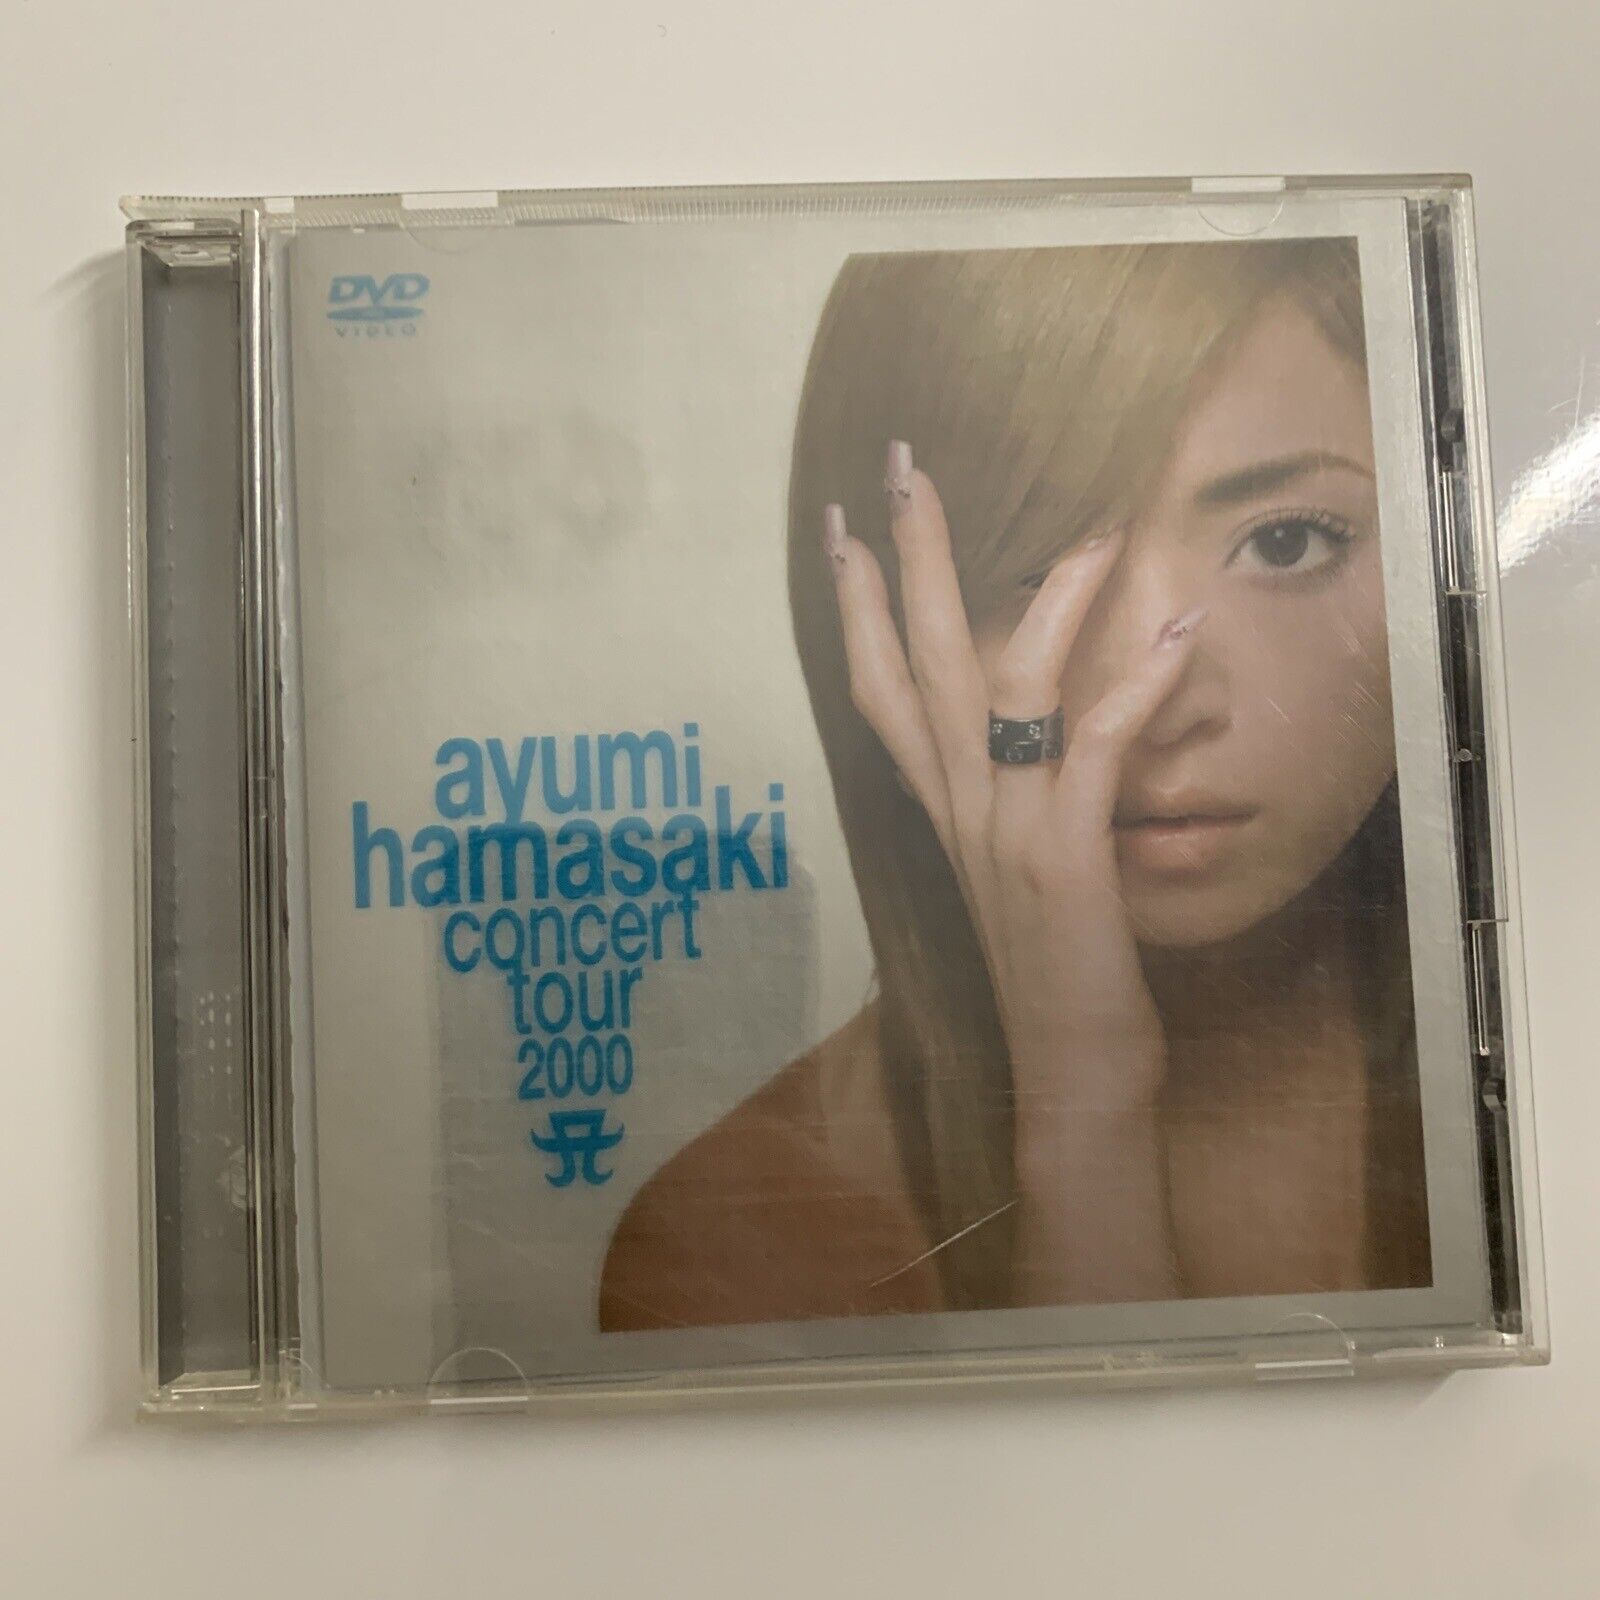 Ayumi Hamasaki - Concert Tour 2000 A Act 2 (DVD, 2000) Region 2